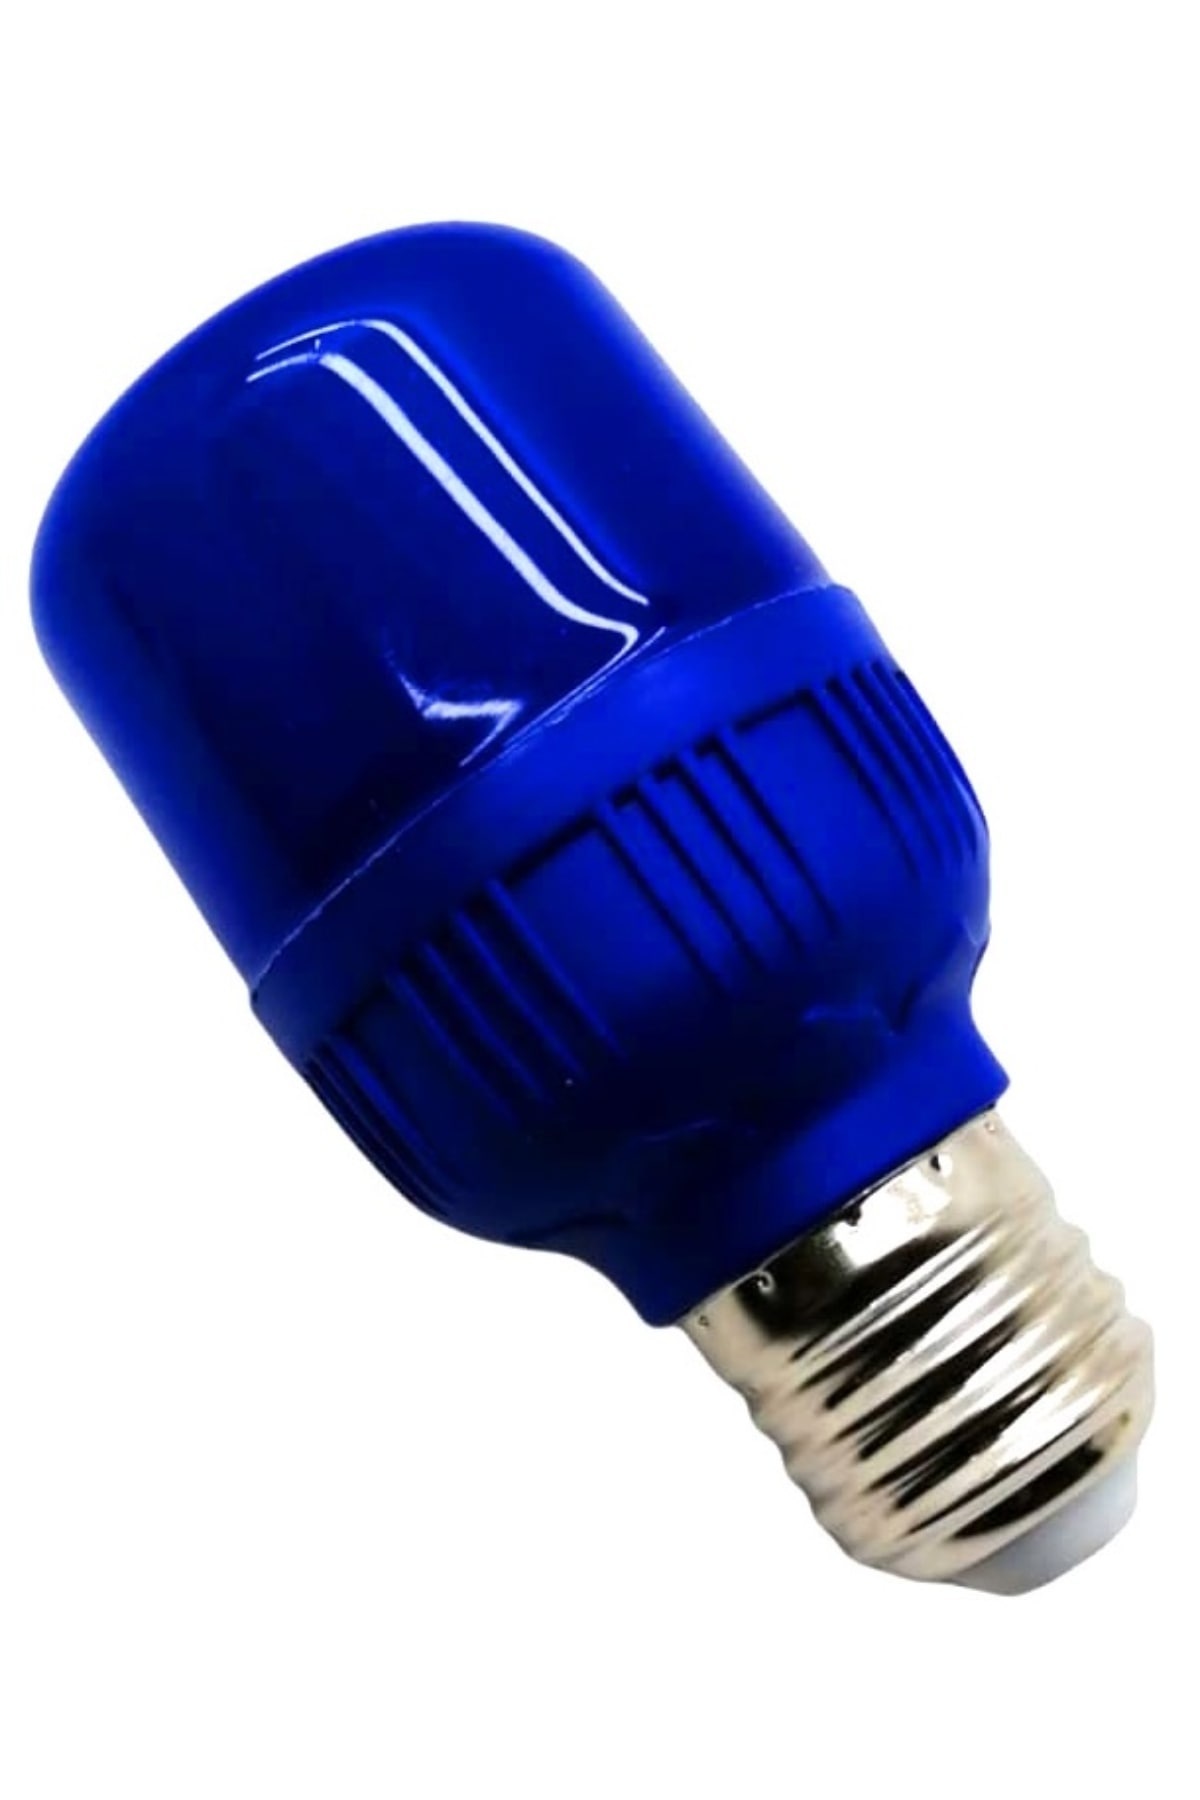 Altaled 5W E27 Touch Mavi Gece Lambası Ampul*200 - 10-0629 - 2345